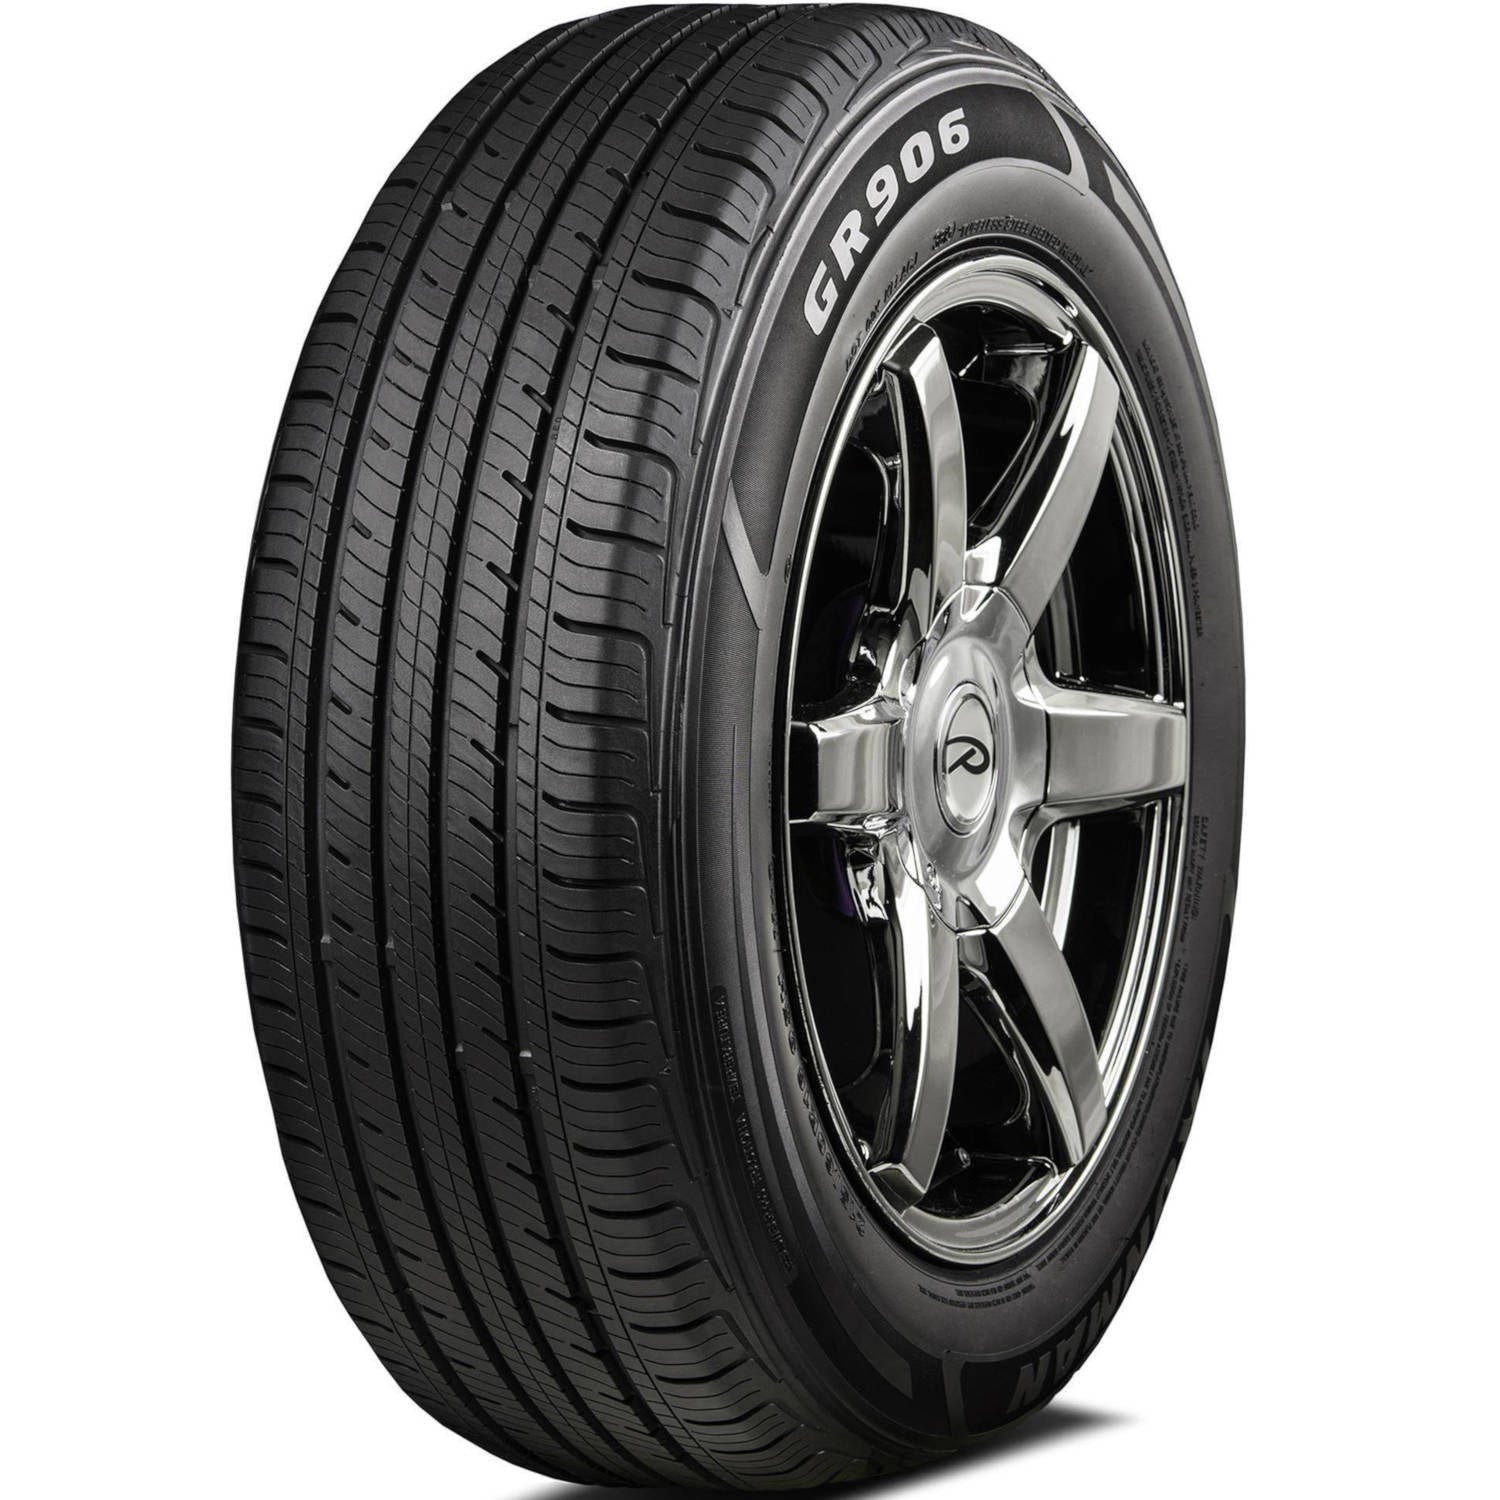 IRONMAN GR906 225/65R17 (28.5X8.9R 17) Tires